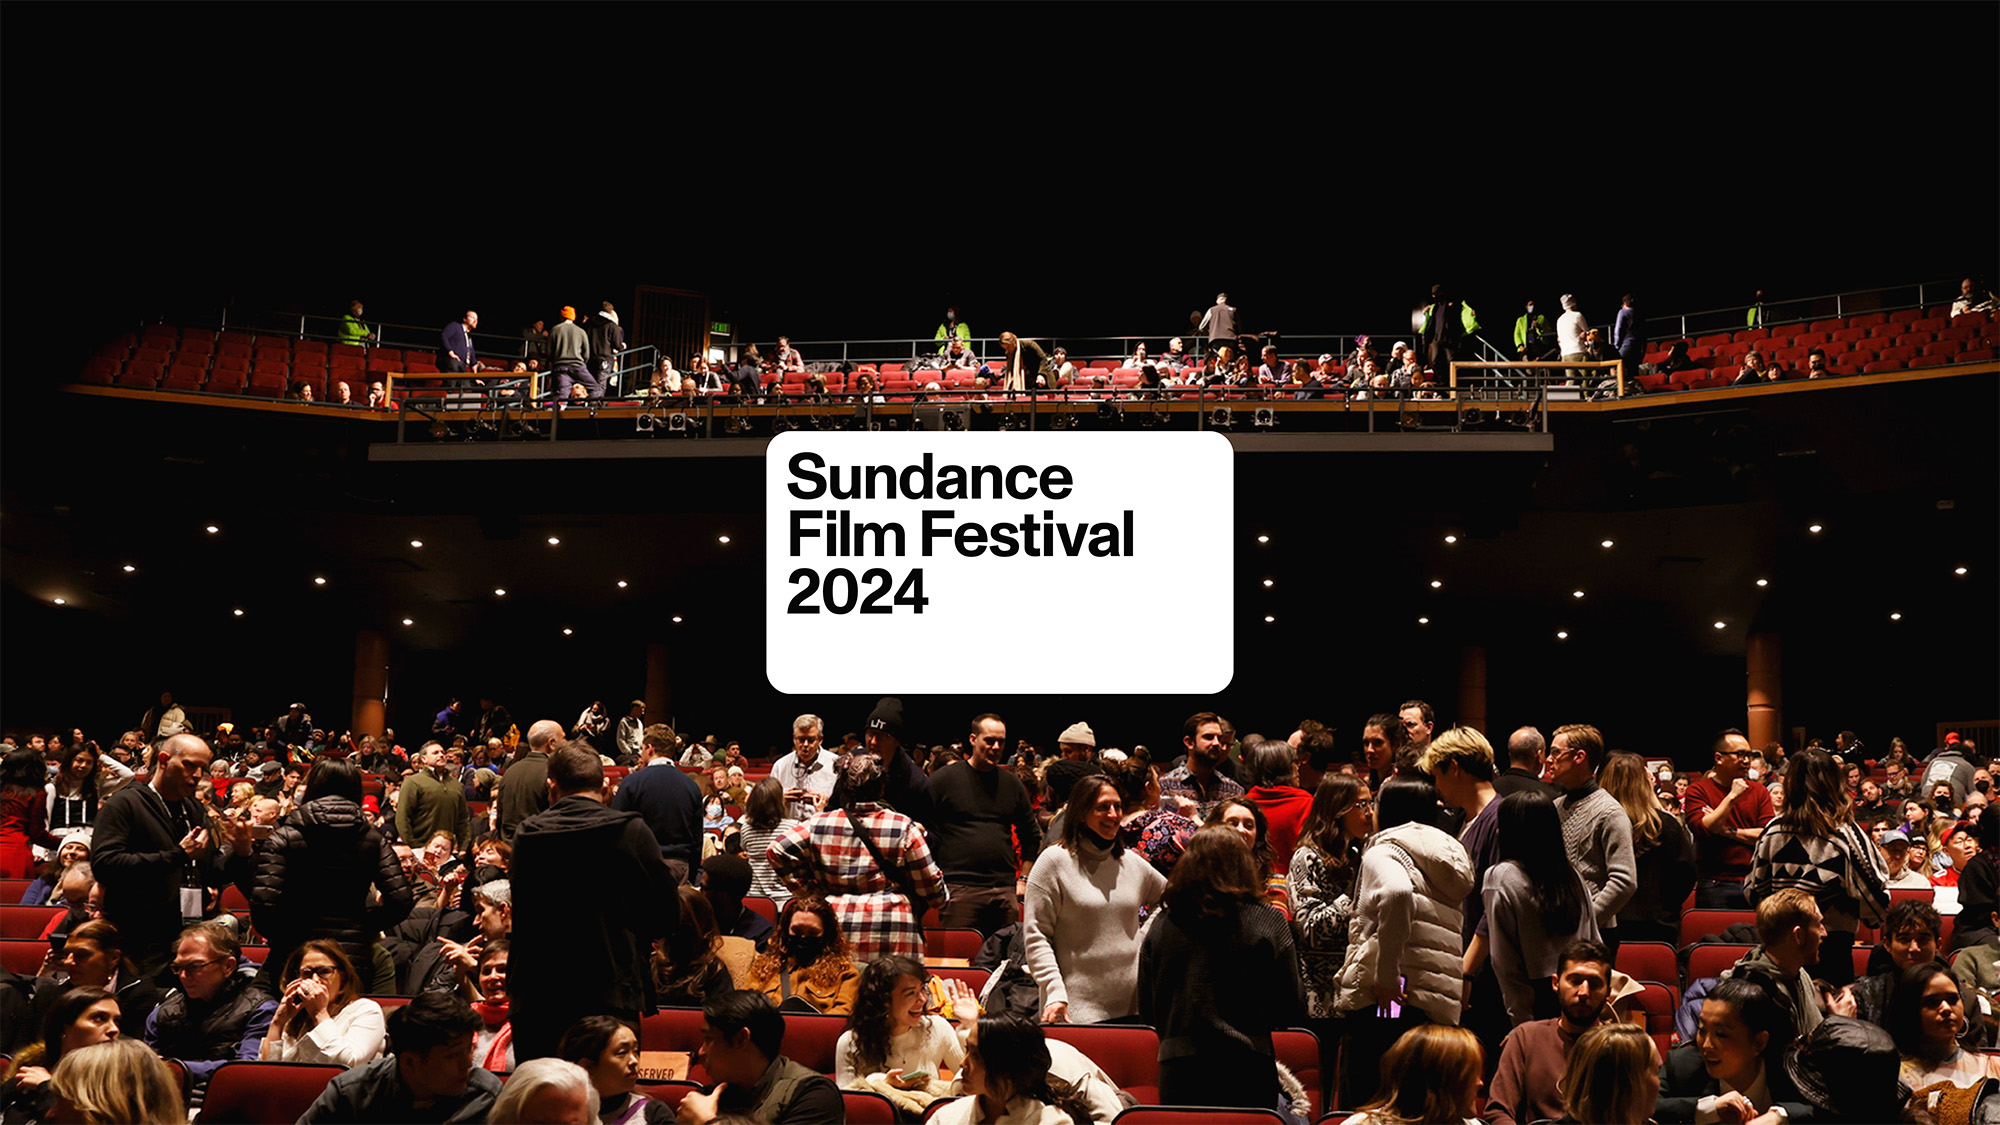 Image from the Sundance Film Festival